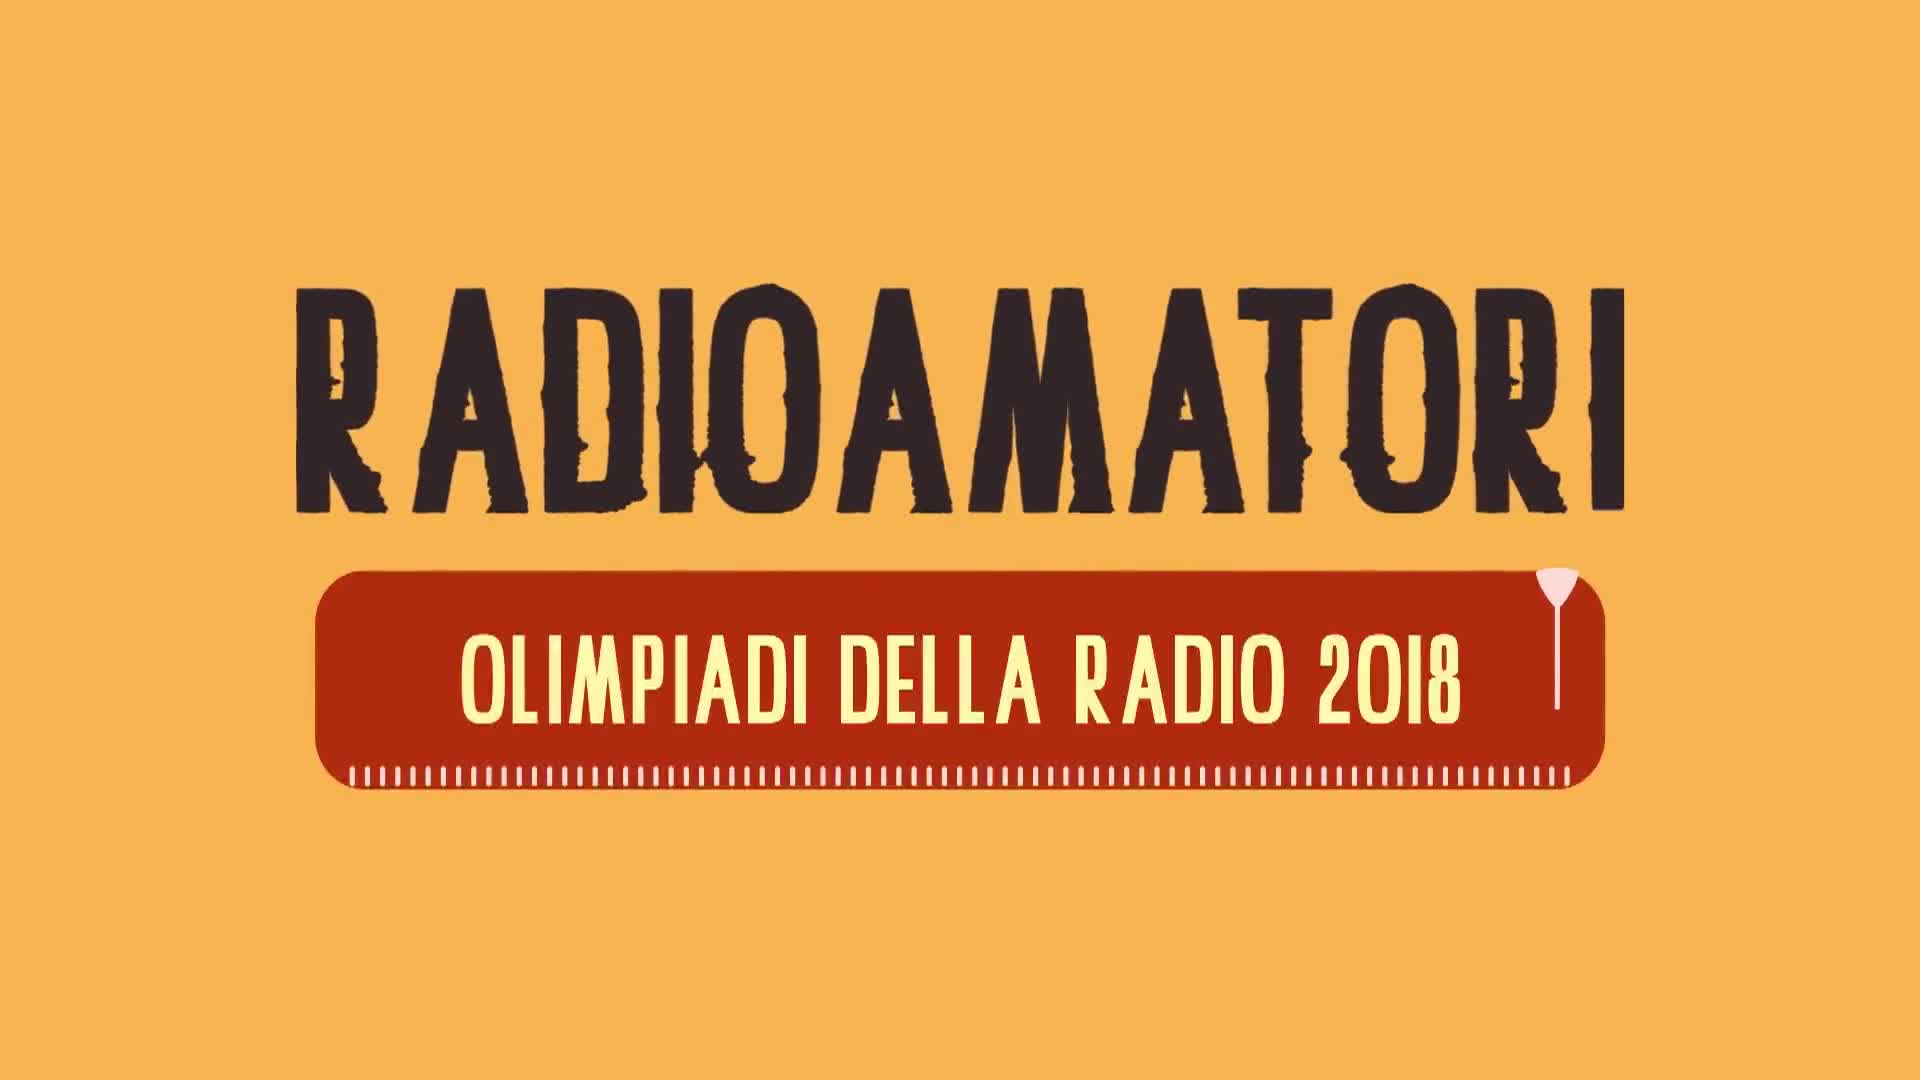 Radioamatori | Olimpiadi della Radio 2018 - immagine